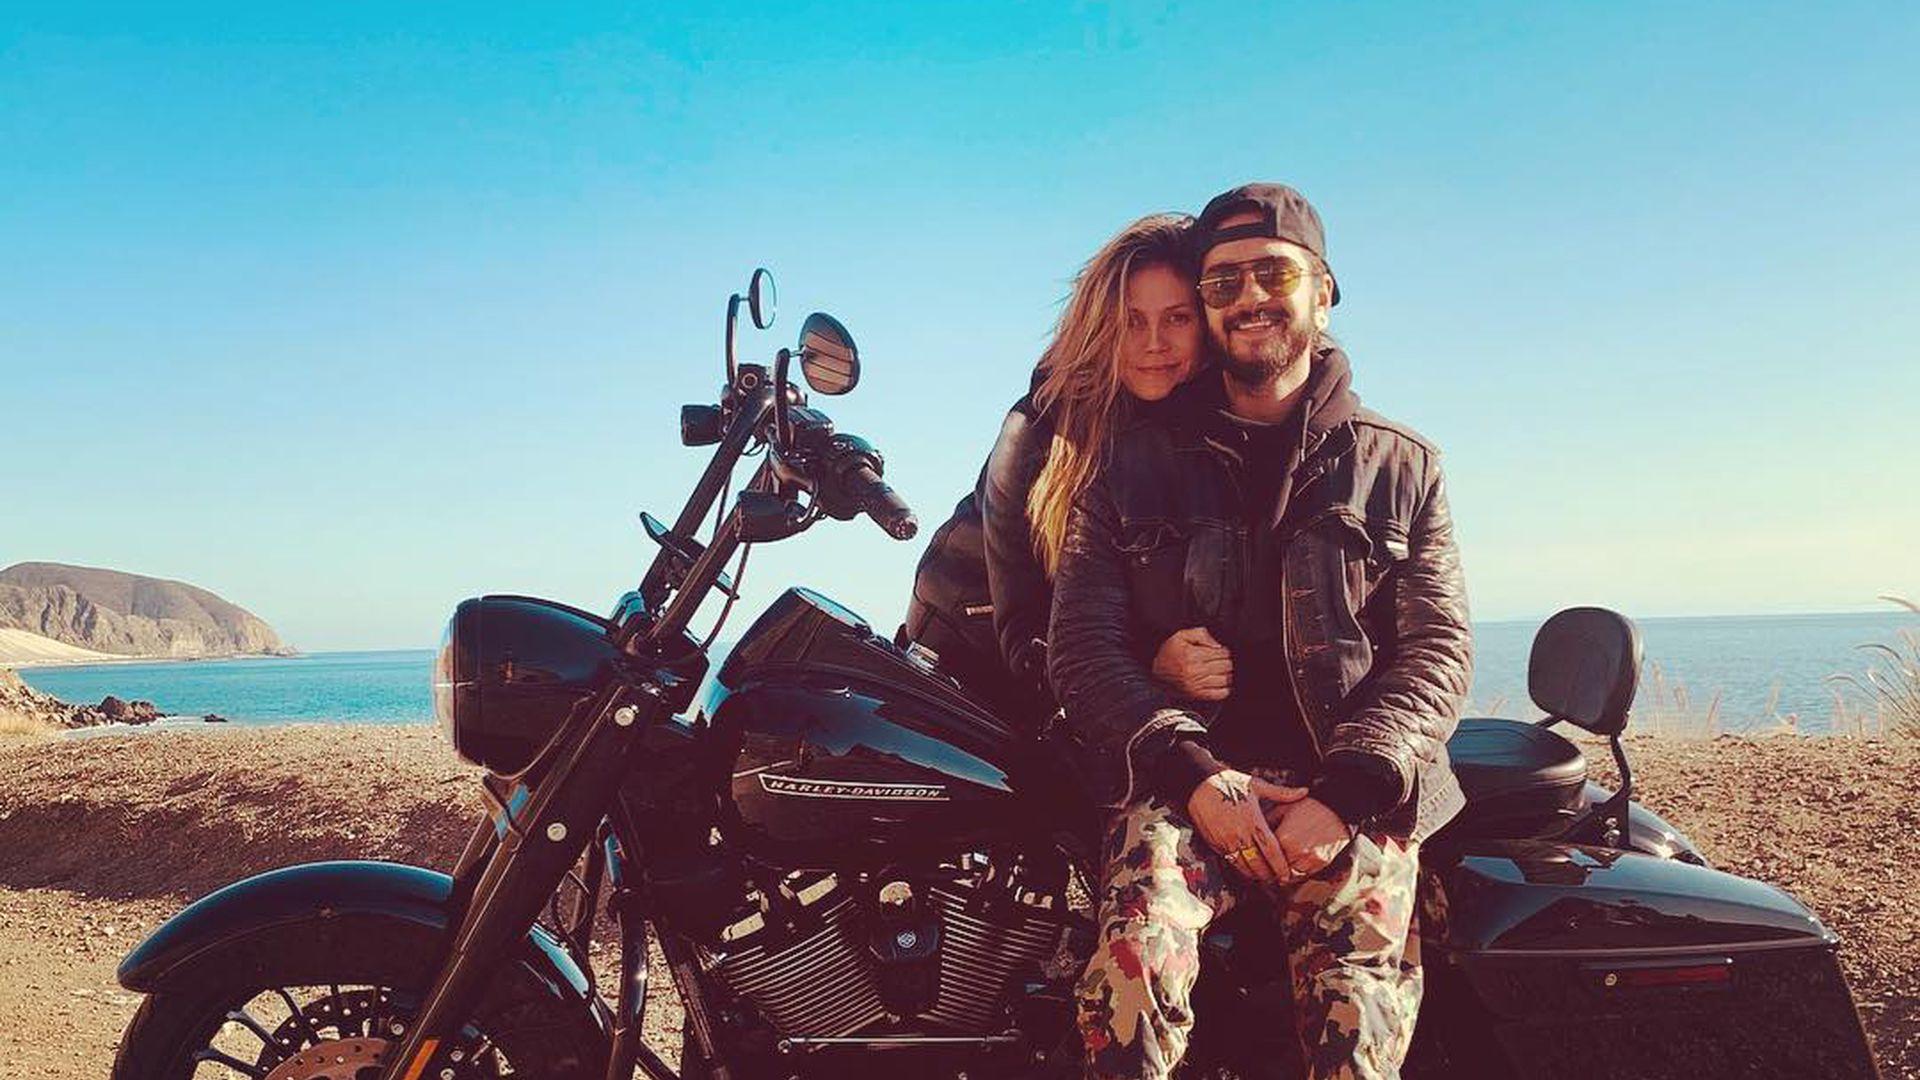 Heidi Klum becomes a real biker bride for her Tom